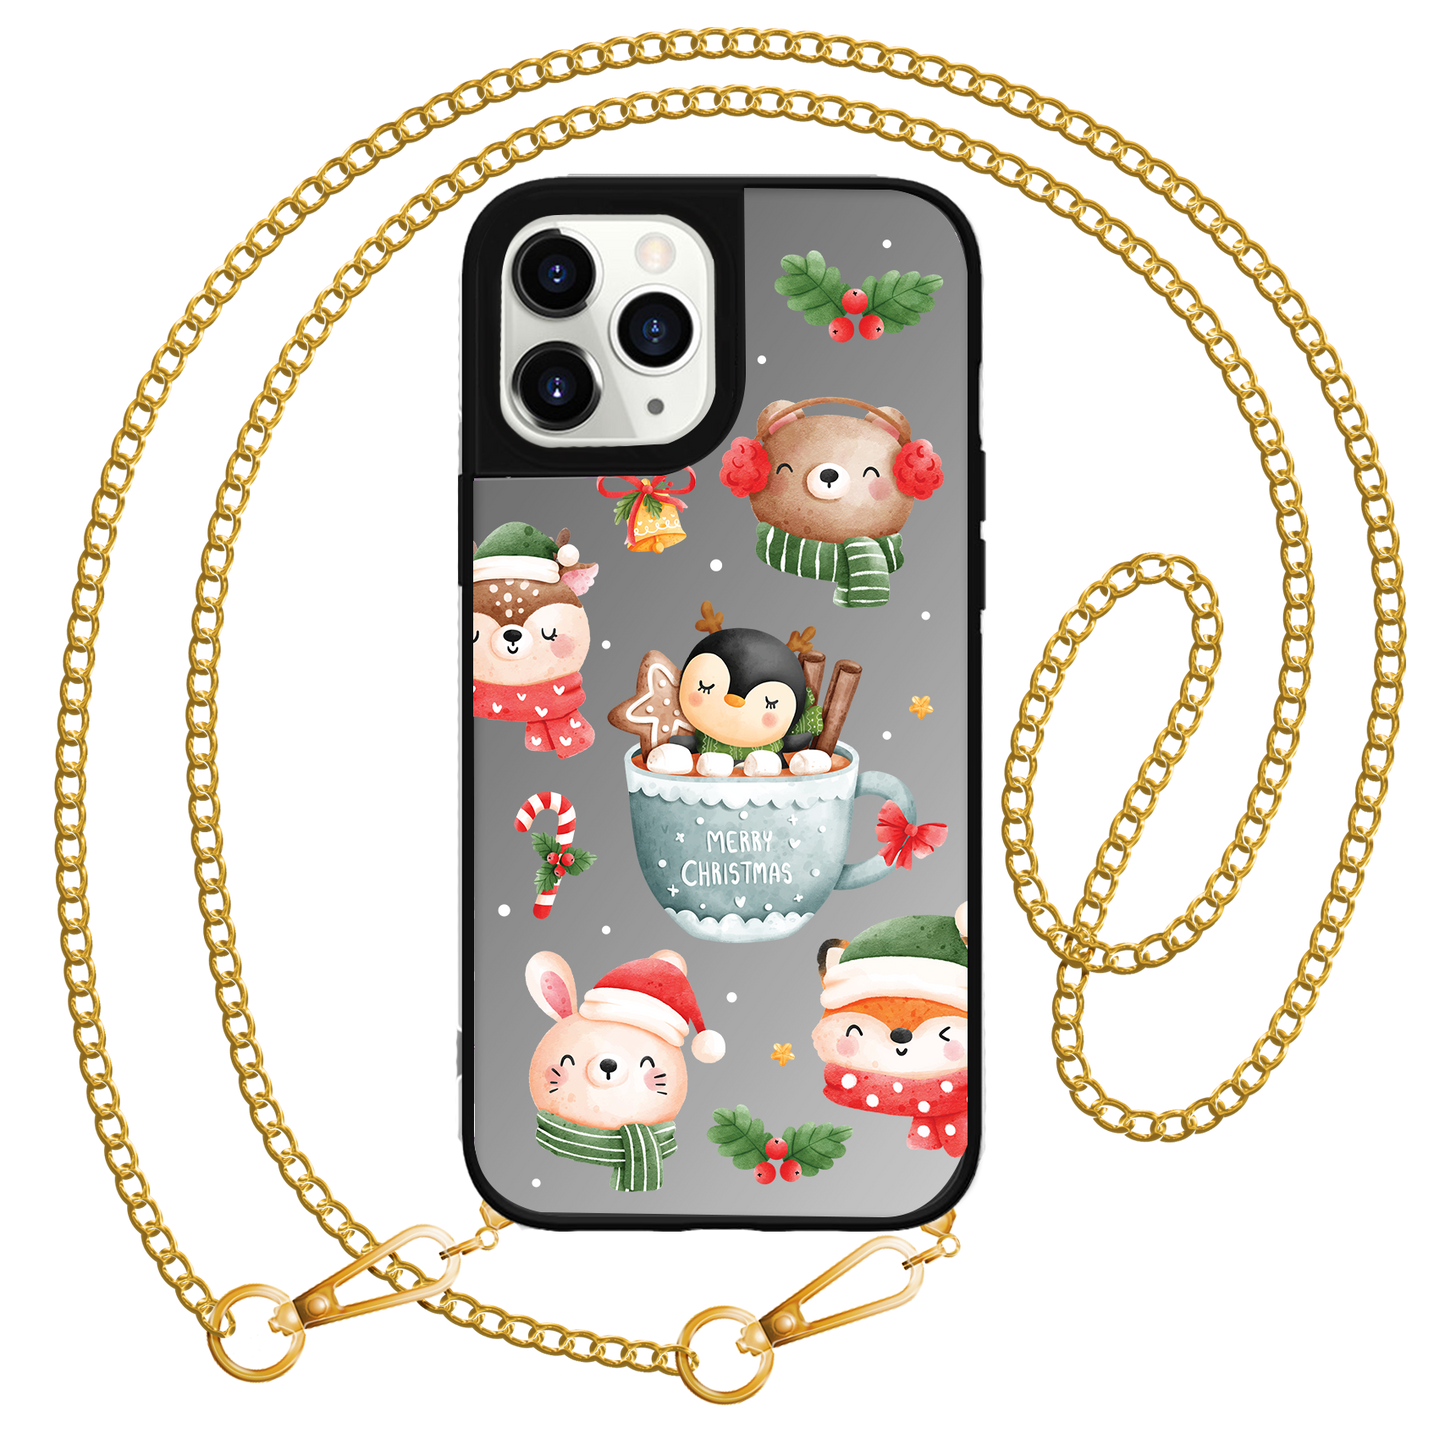 iPhone Mirror Grip Case - Storybook Christmas 2.0